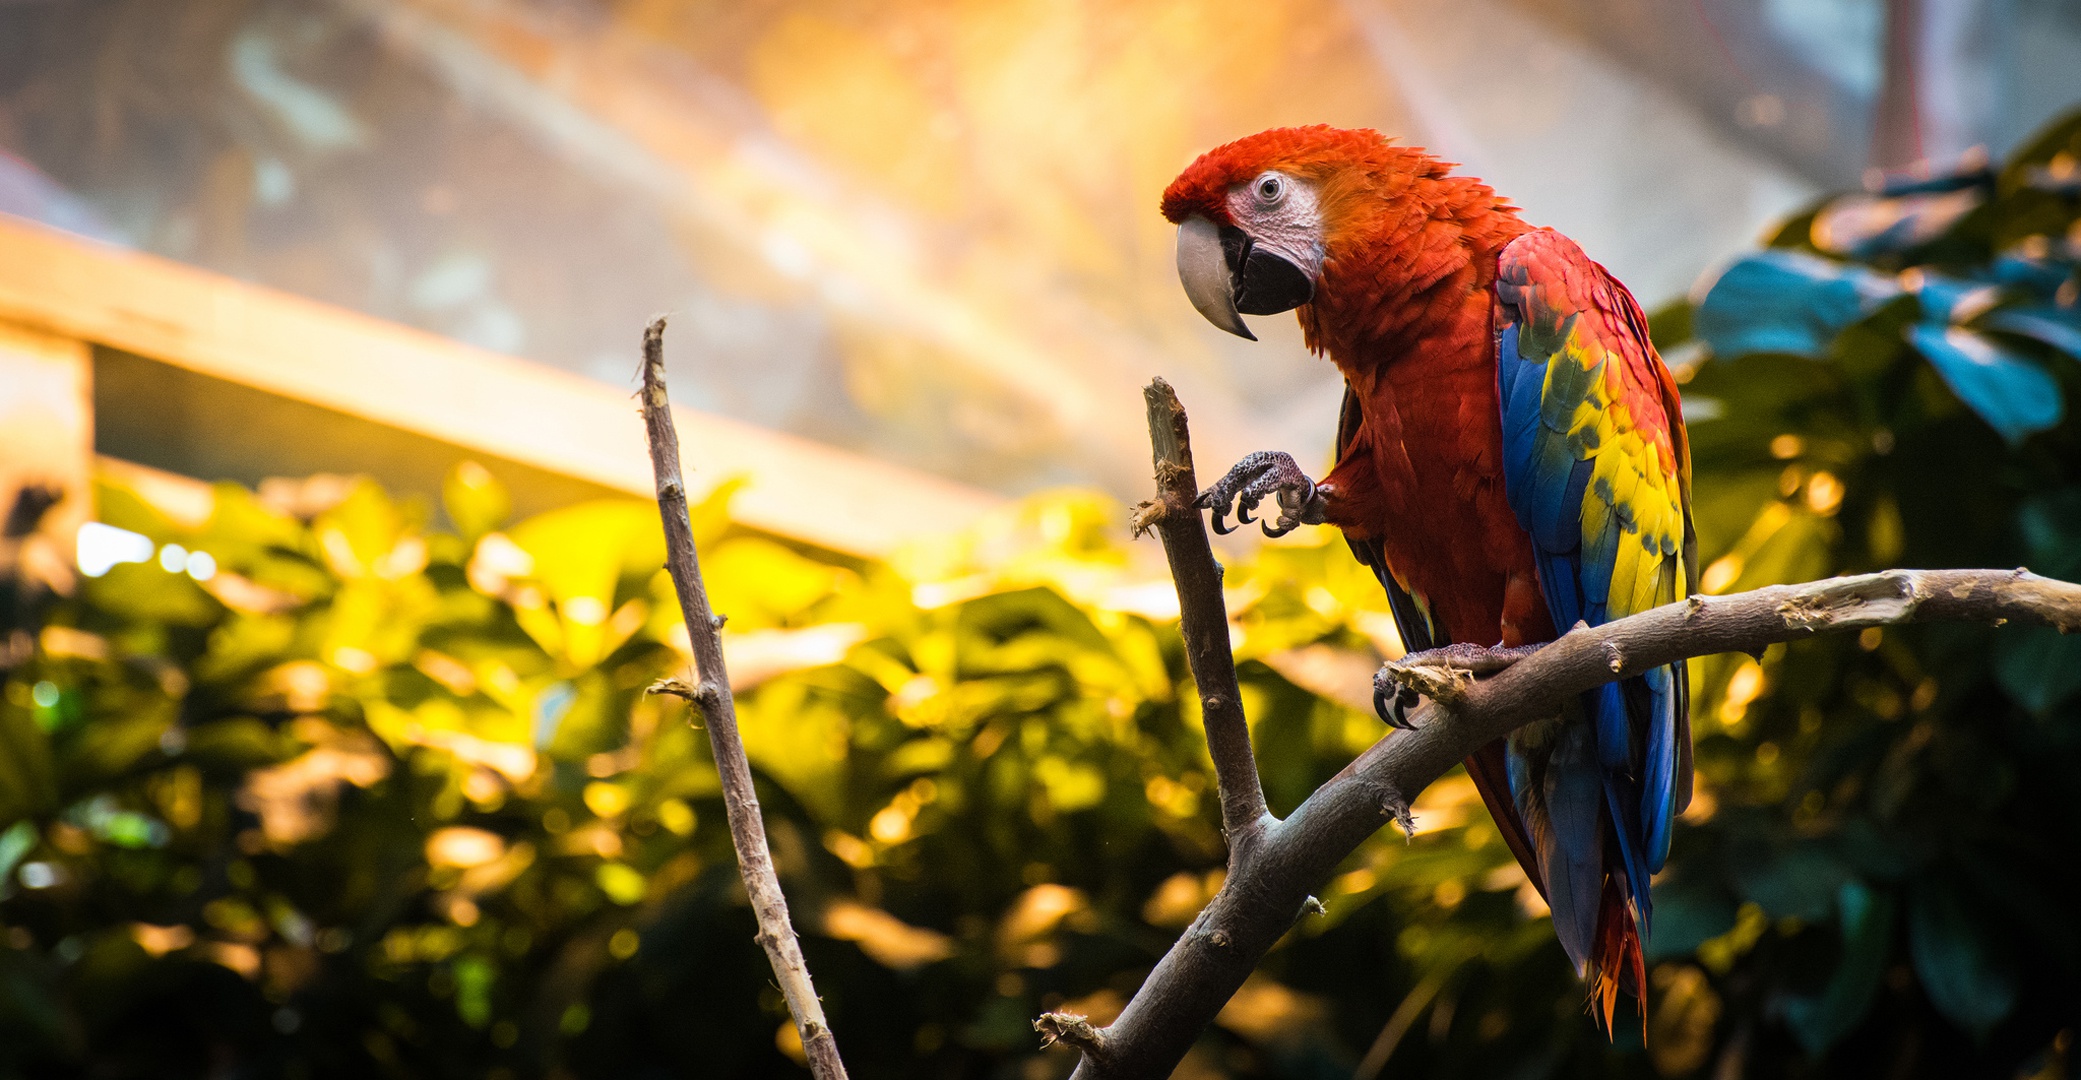 Bird Parrot Scarlet Macaw 2081x1080